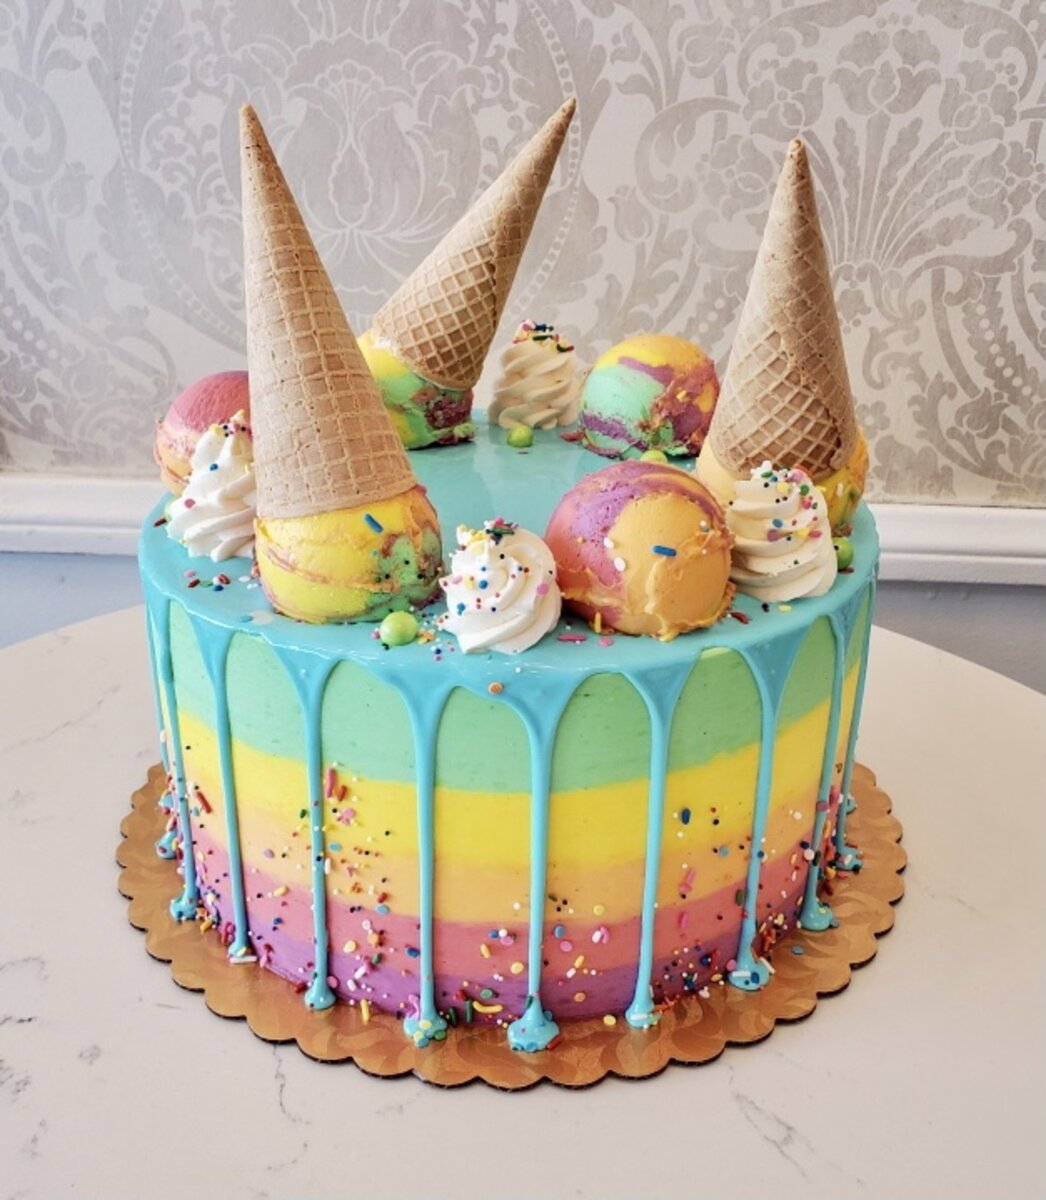 Yo Cherry - Happy Birthday Michelle! Ice cream cake 😋 | Facebook